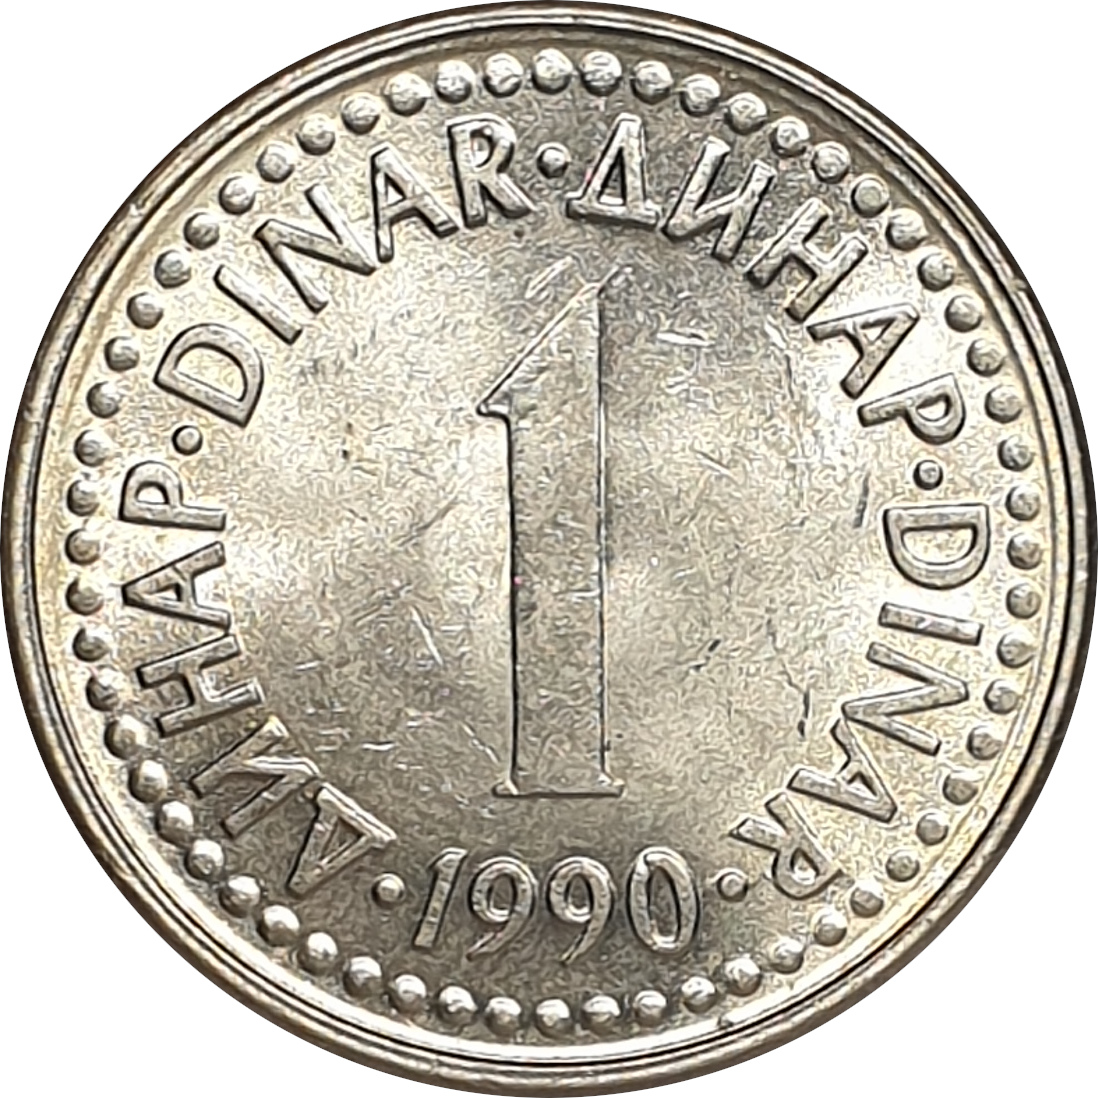 1 dinar - 1990 issue